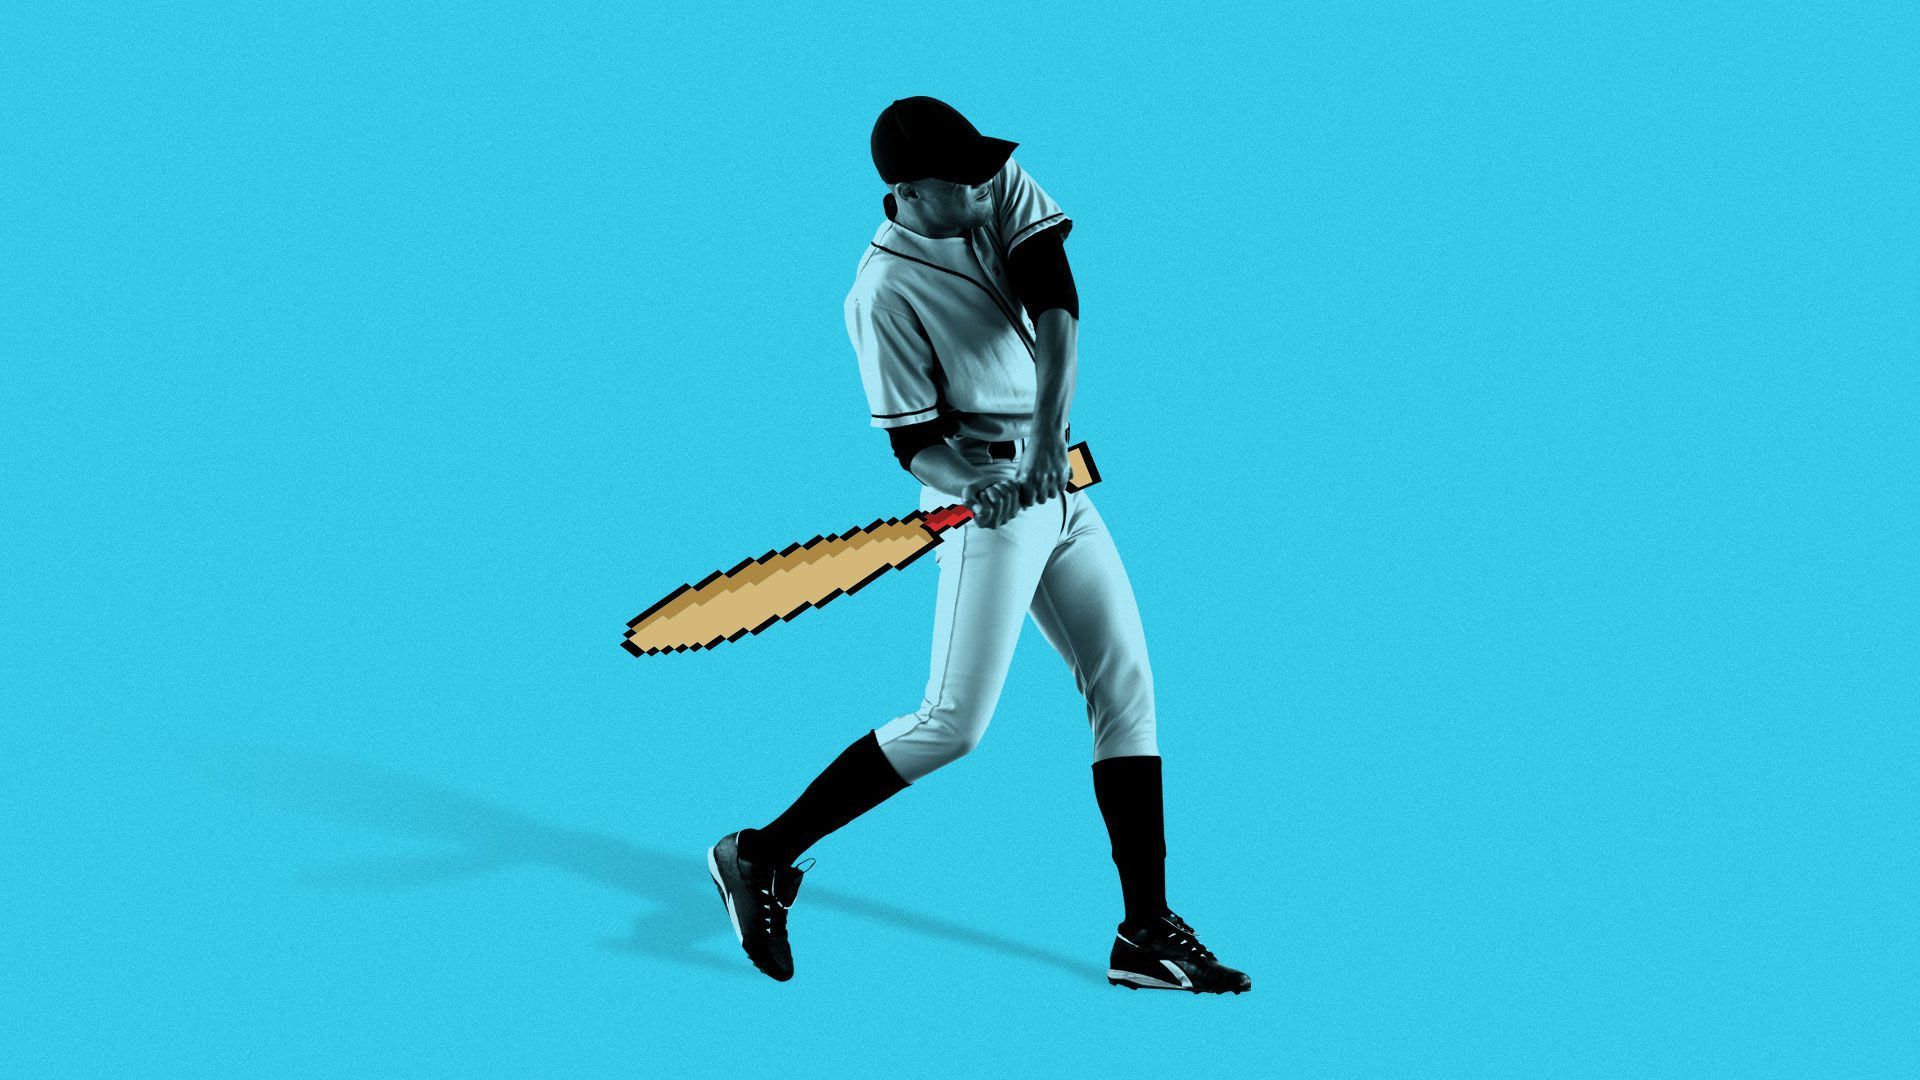 Illustration of a baseball player using a digital bat